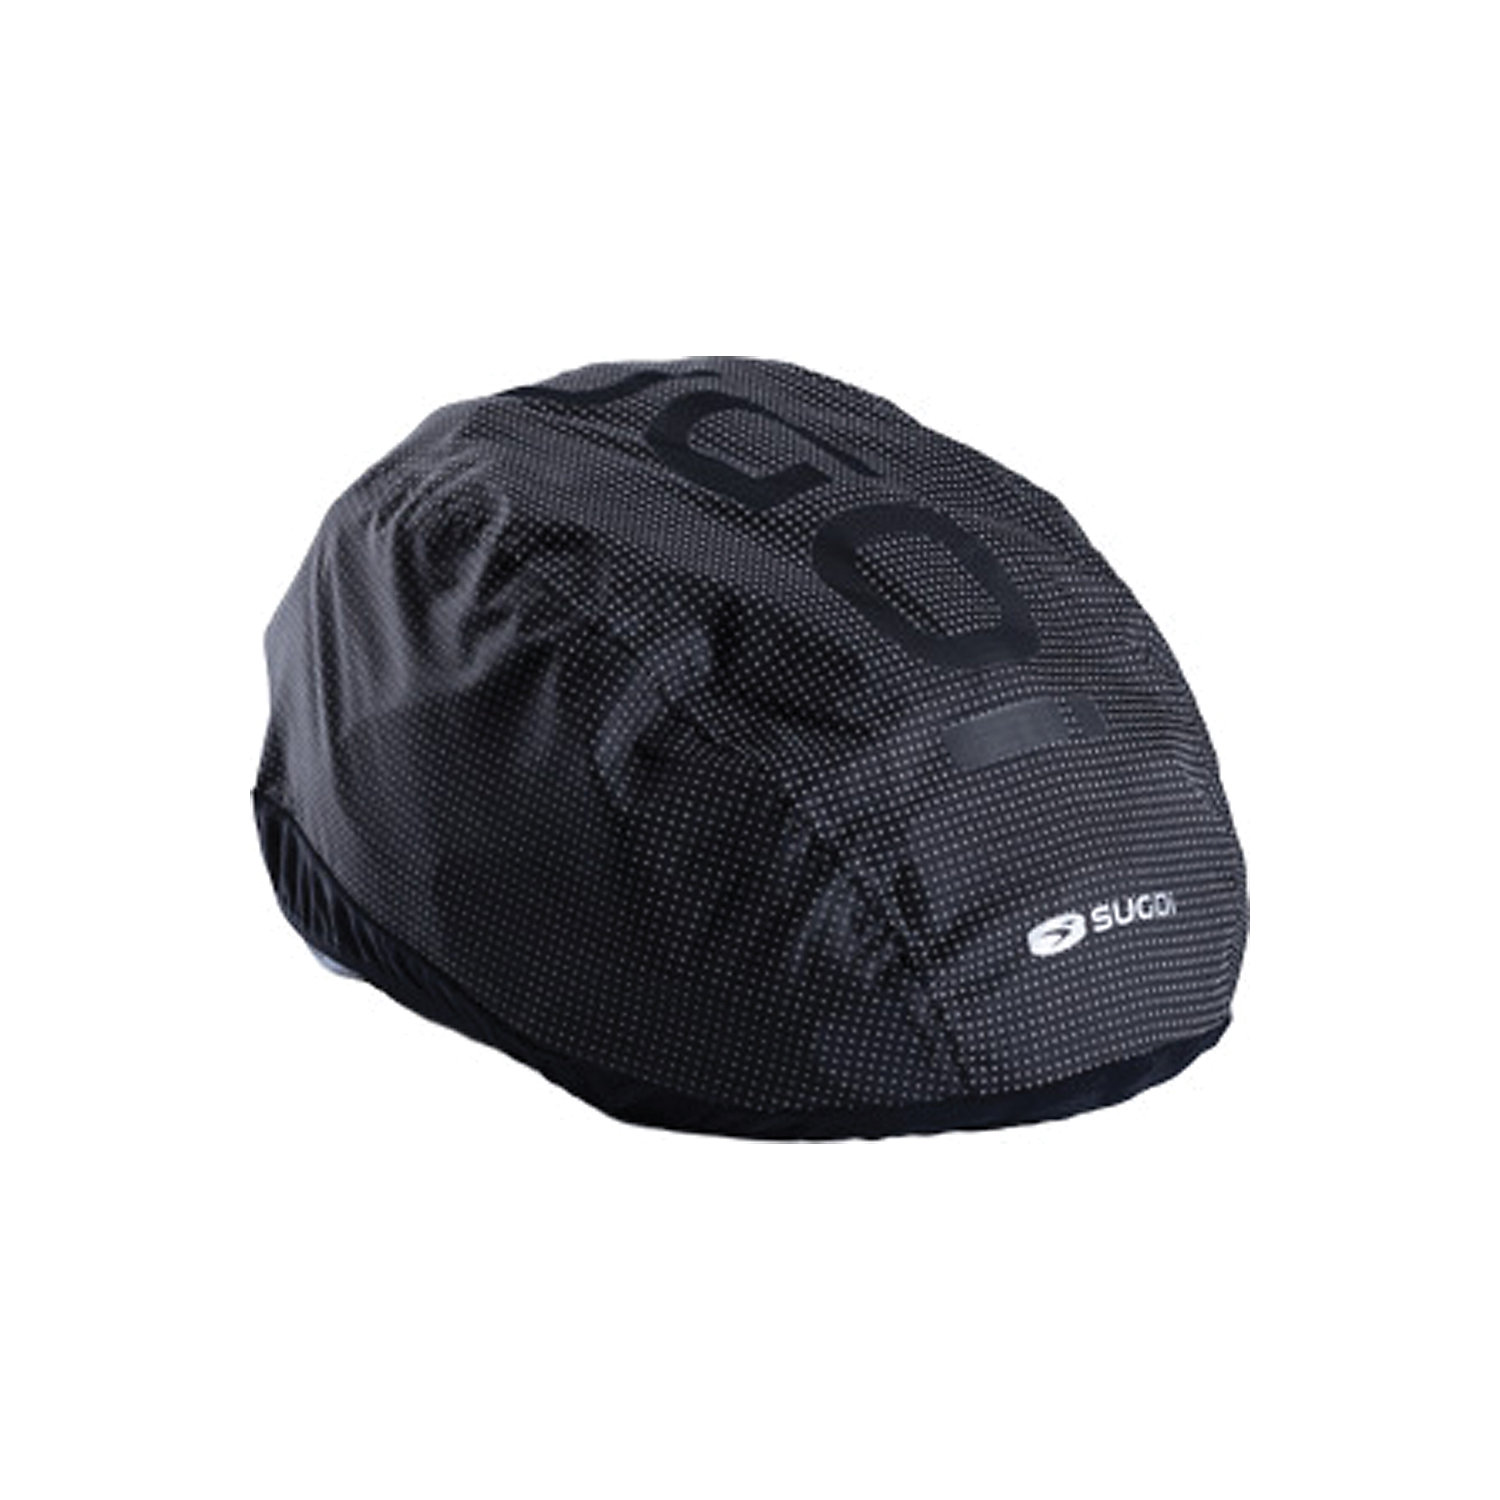 Sugoi Zap 2.0 Helmet Cover